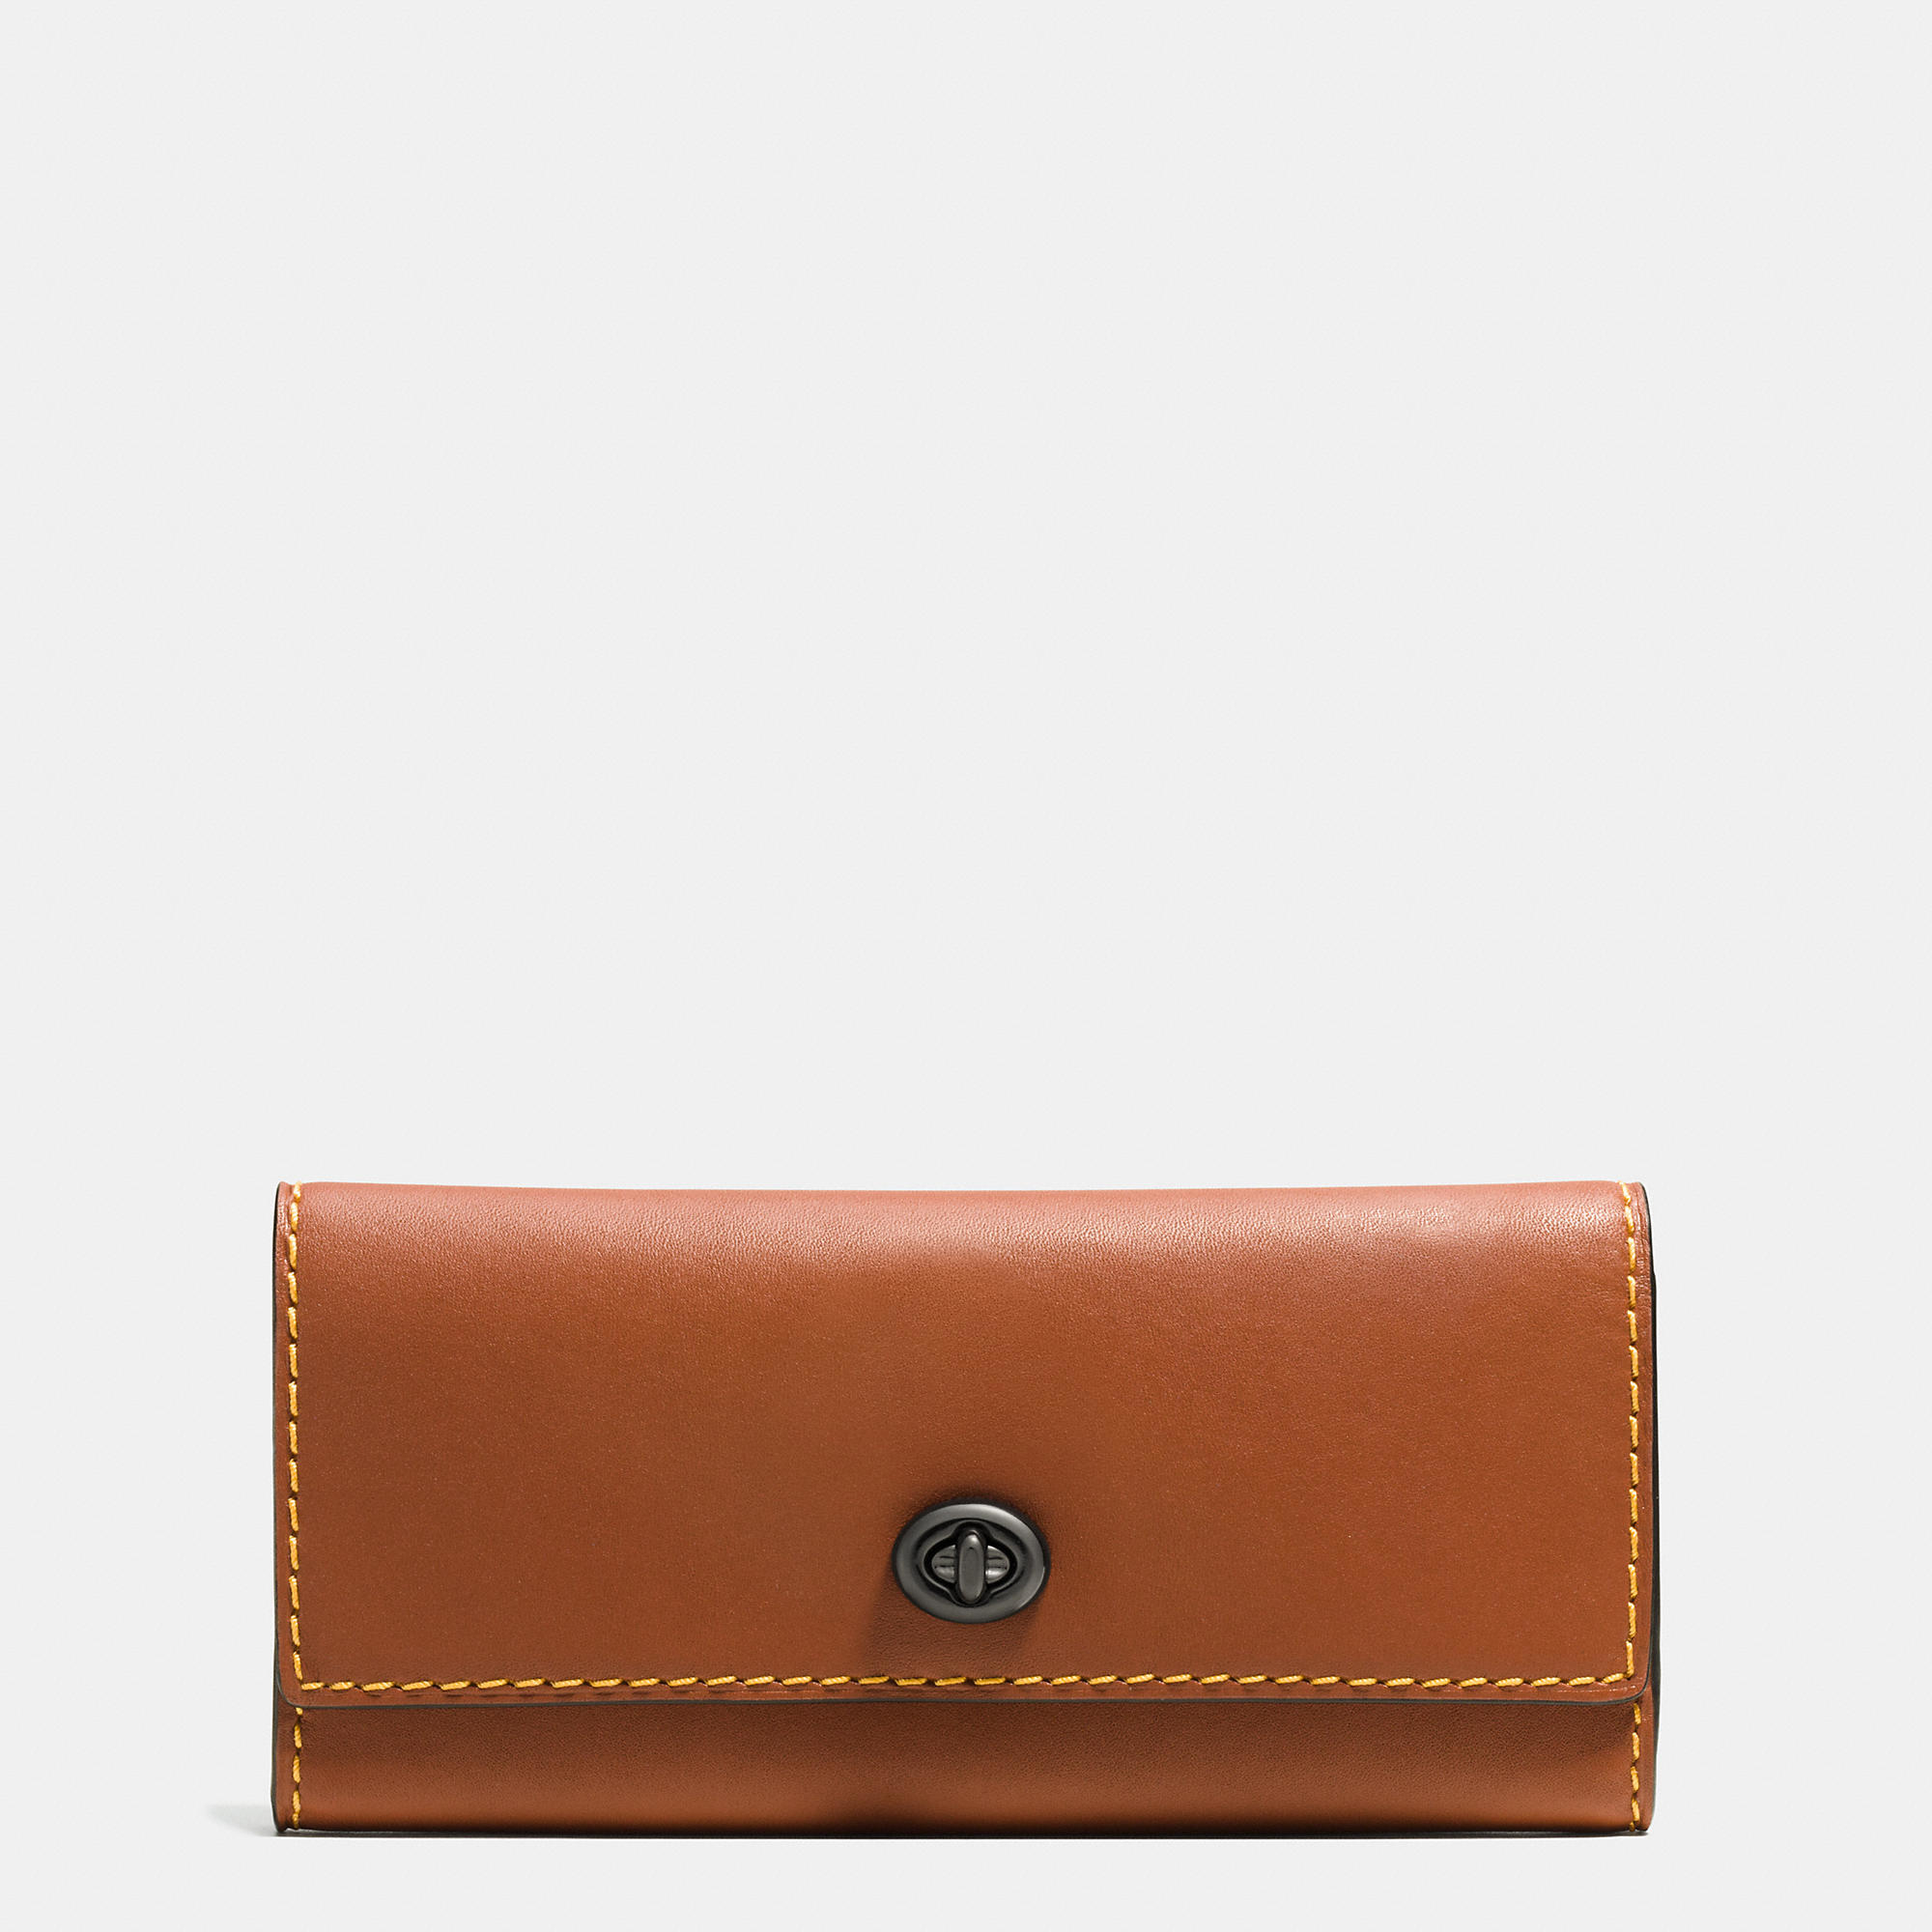 Lyst - Coach Turnlock Wallet In Glovetanned Leather in Brown